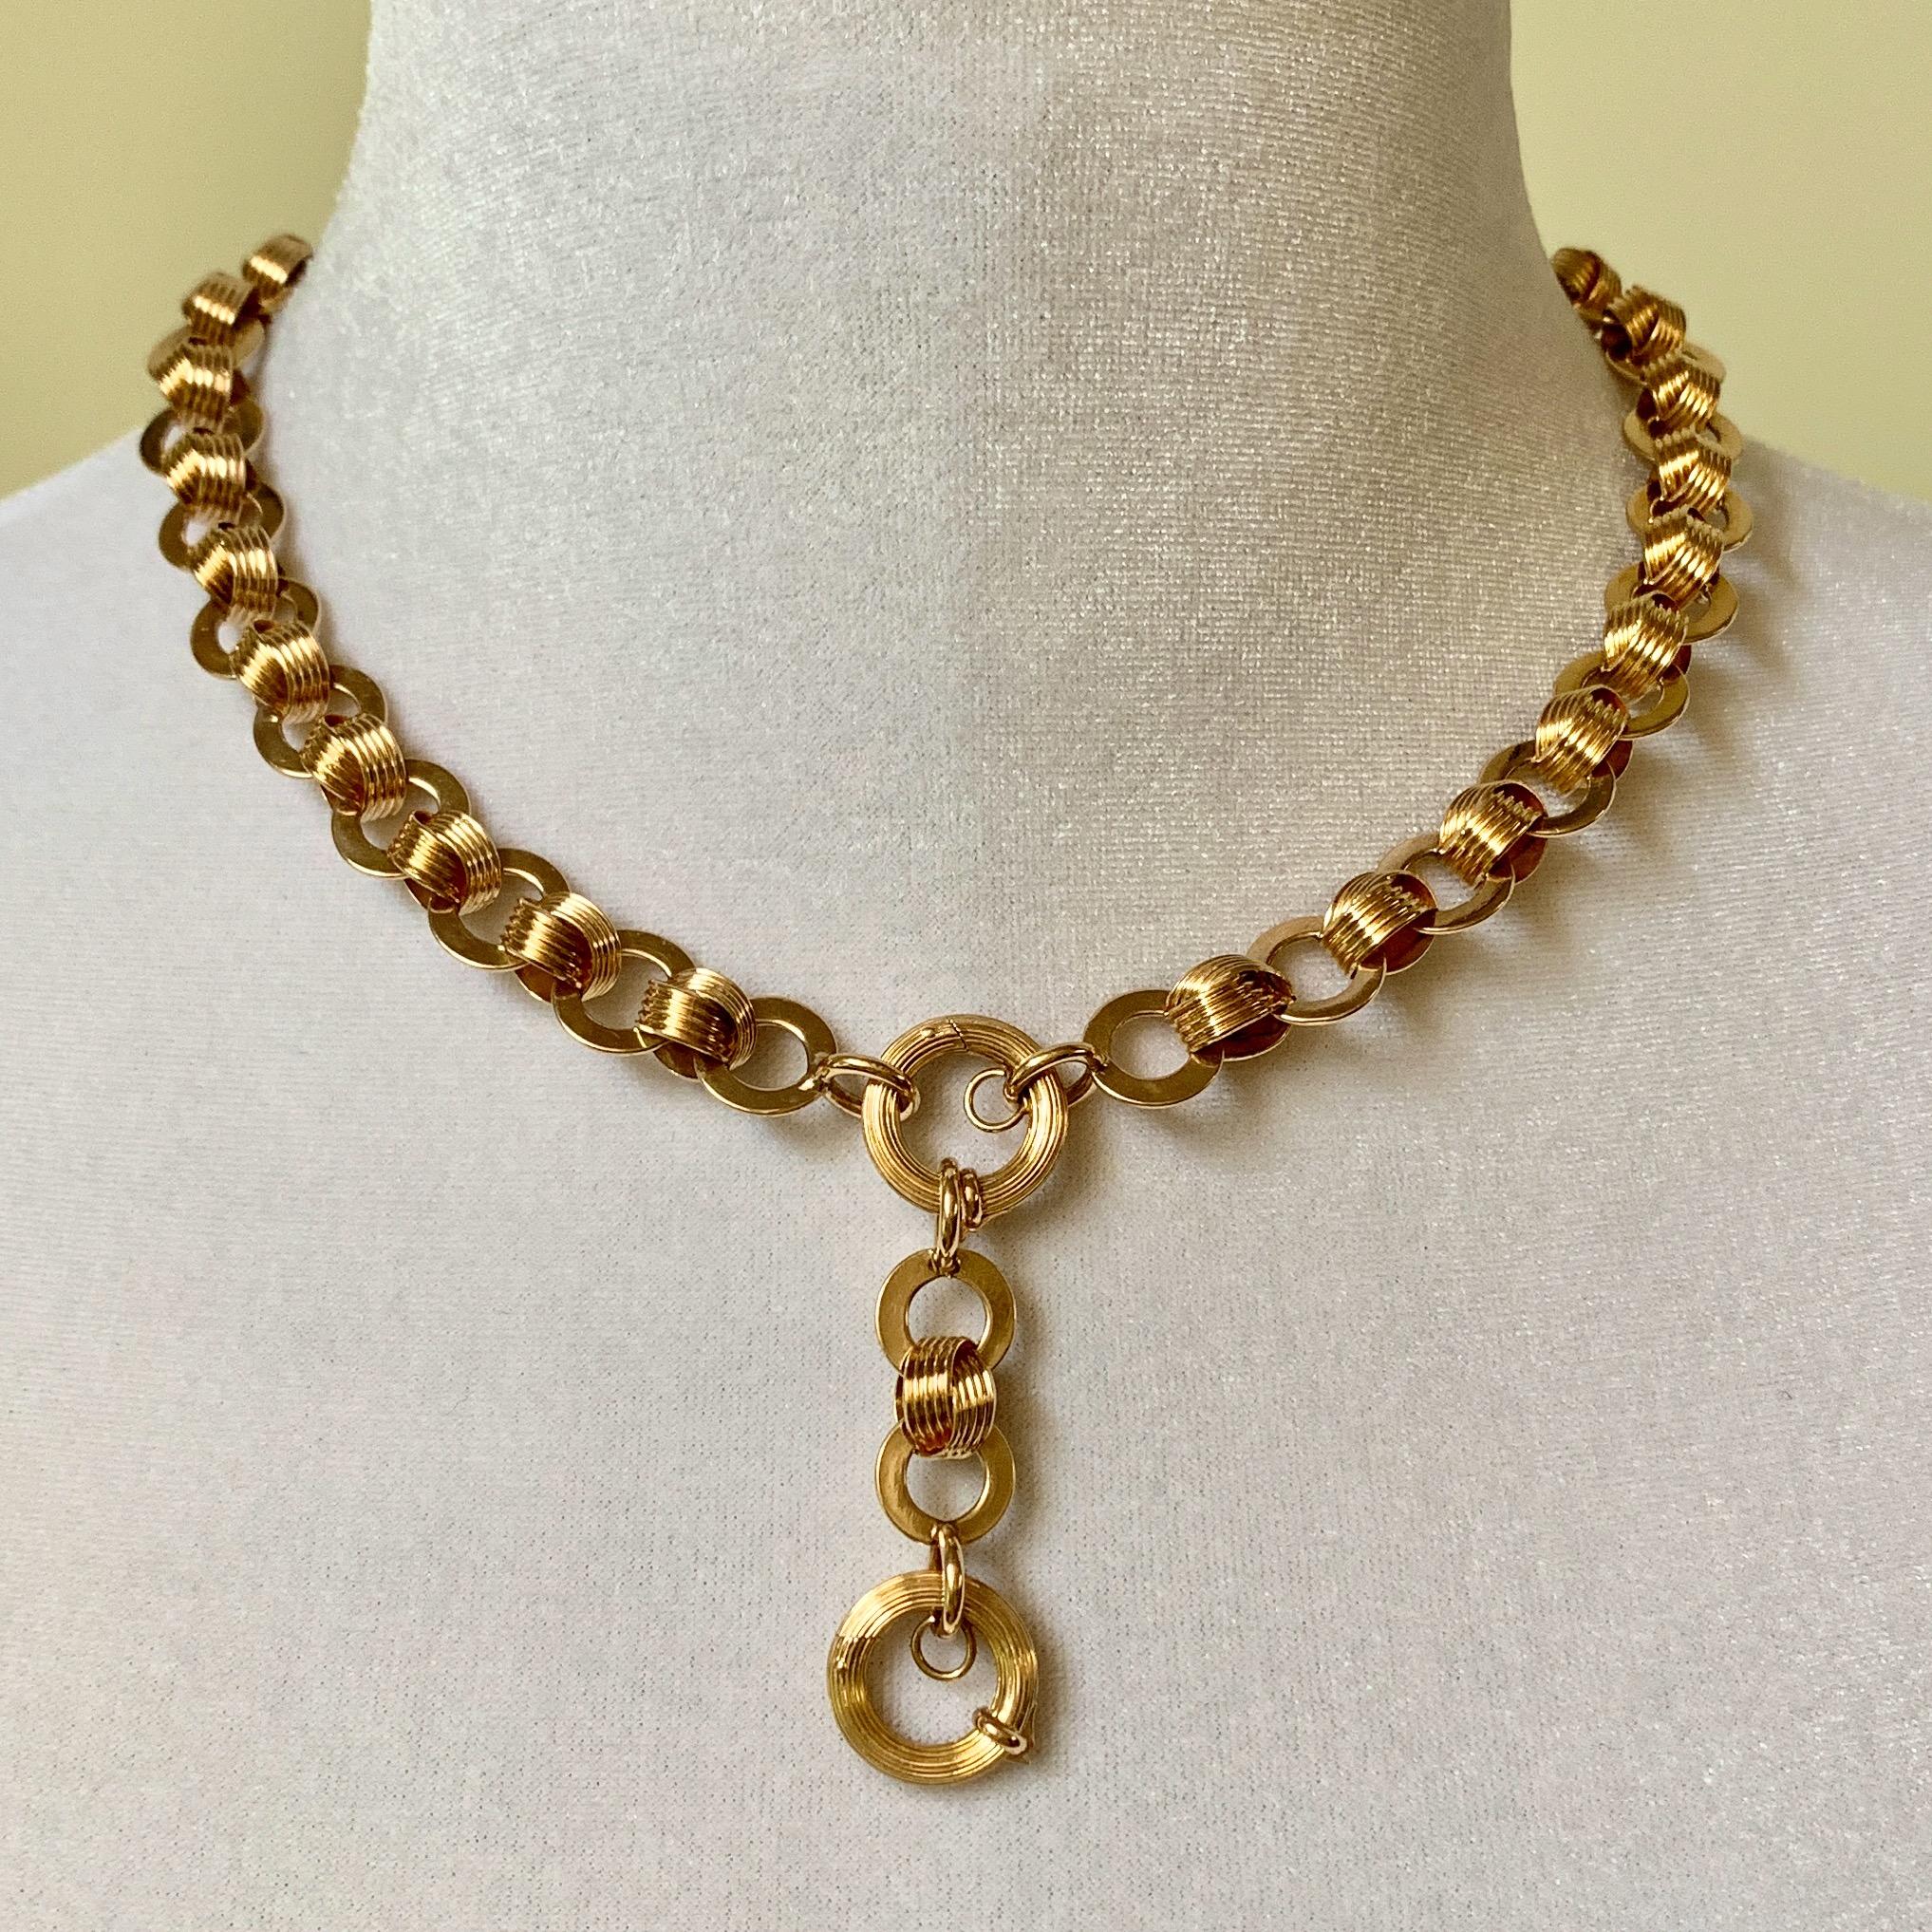 18 carat gold fob chain